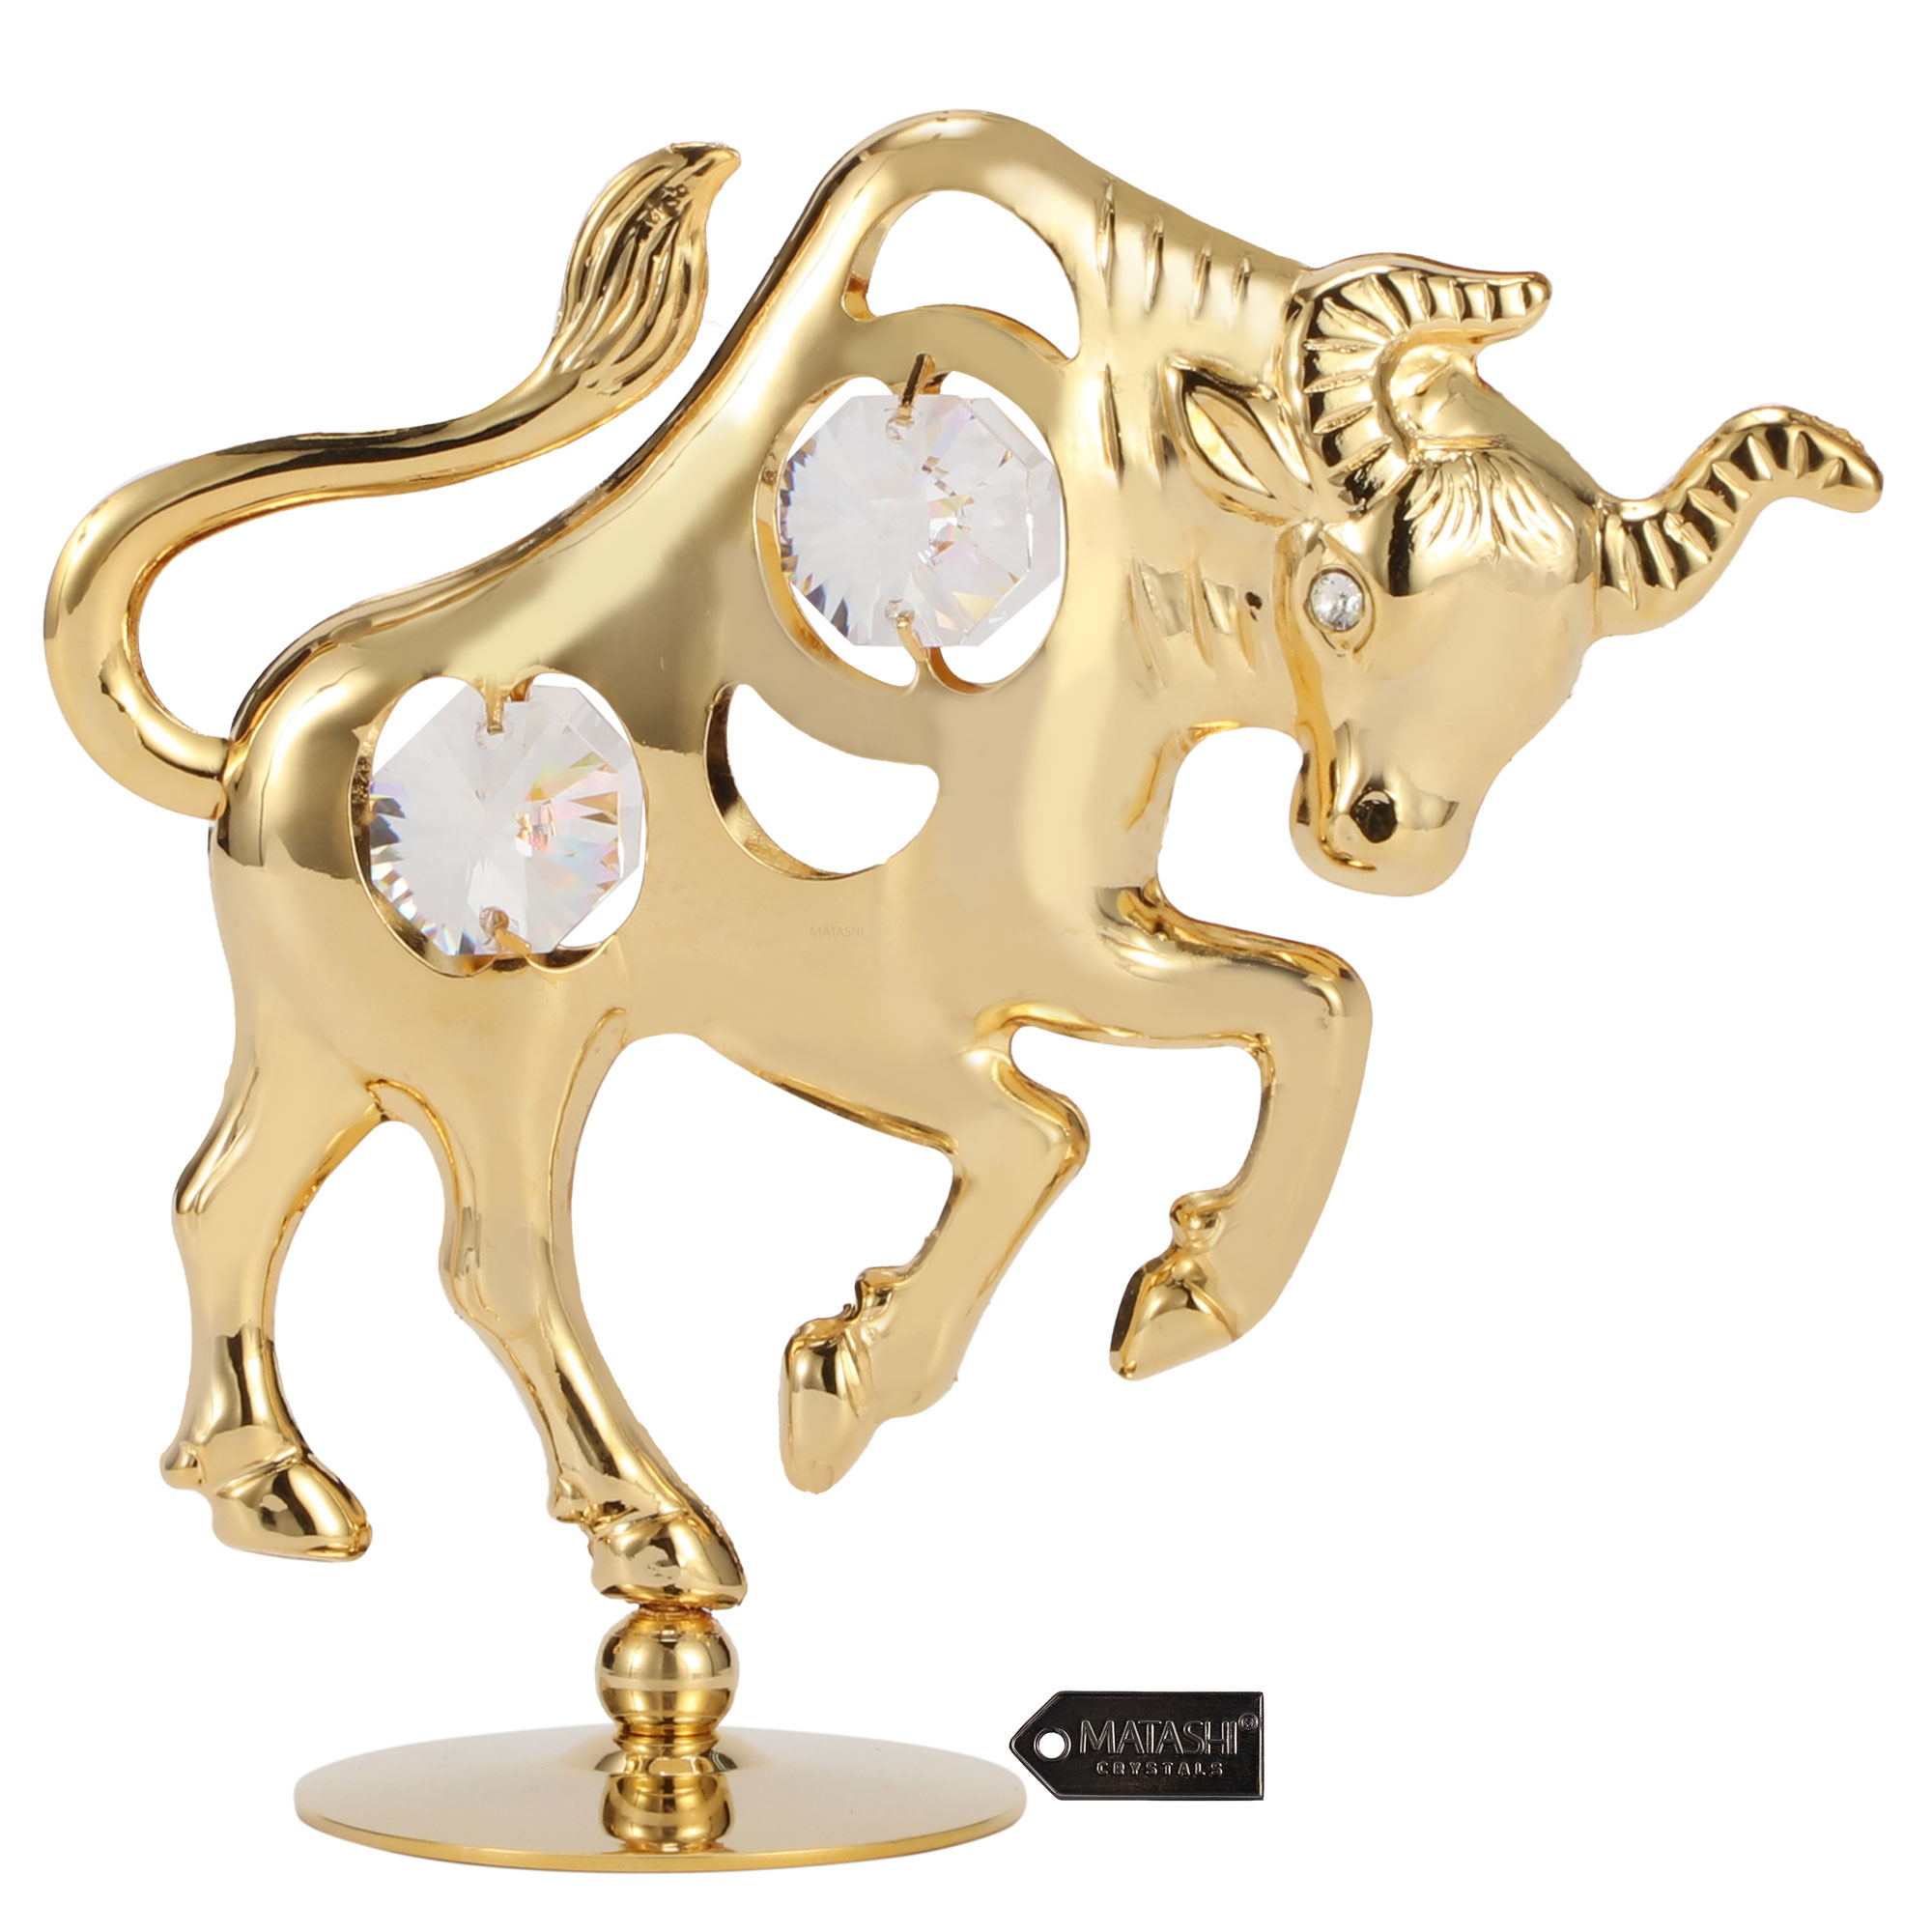 Matashi 24K Gold Plated Crystal Studded Ox/Bull Figurine Ornament